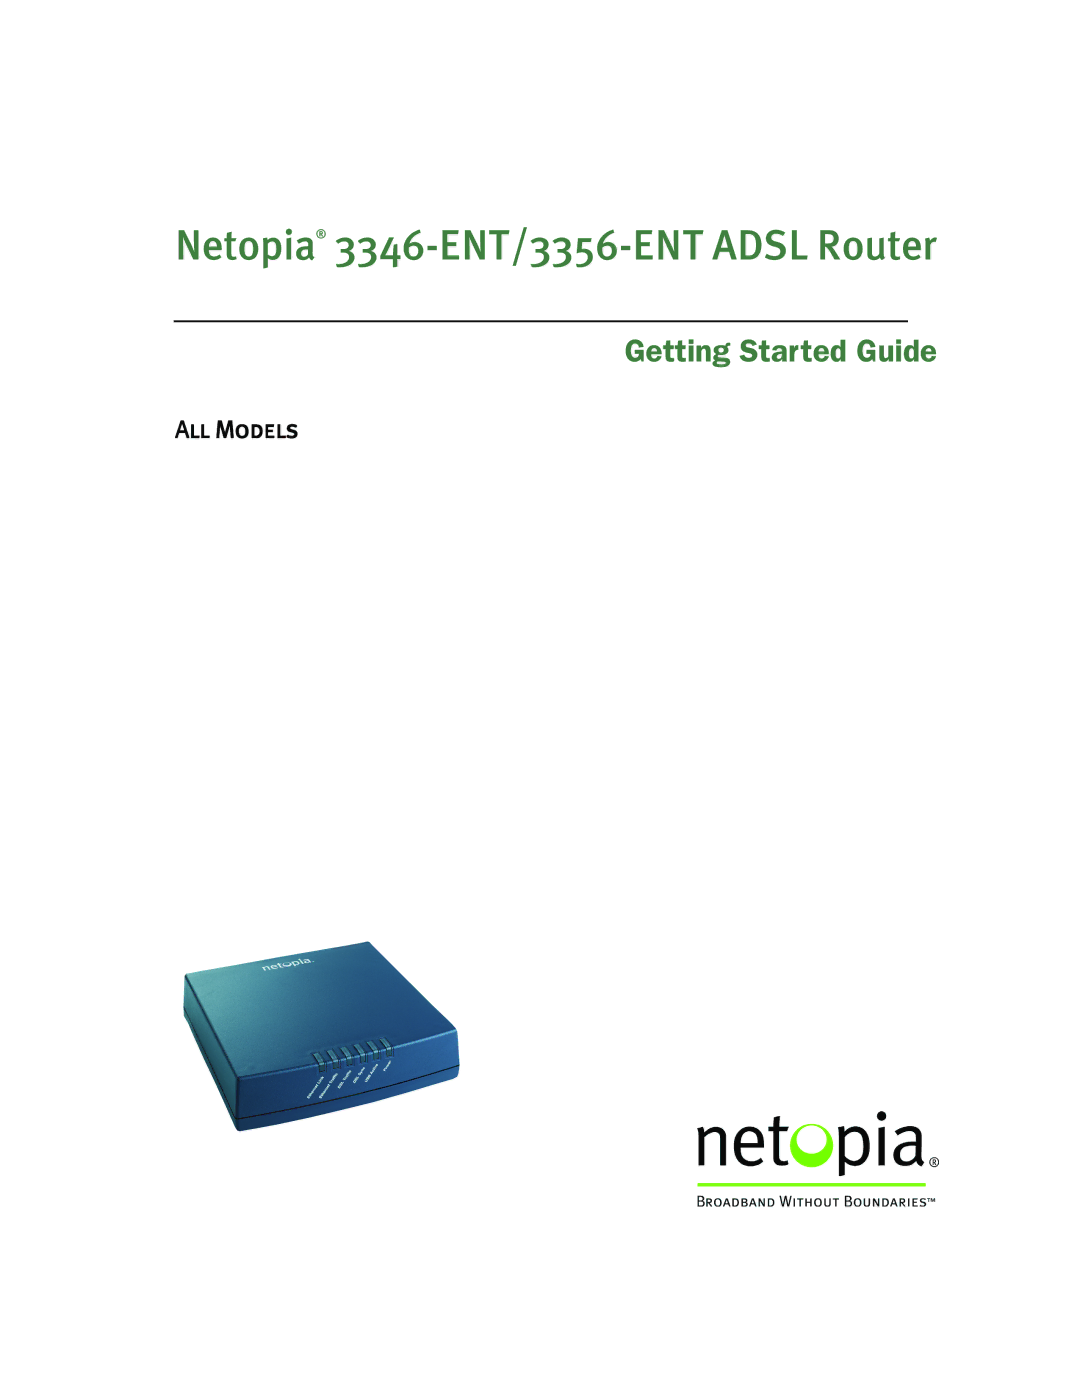 Netopia 3346NENT, 3346N-ENT manual Netopia 3346-ENT/3356-ENT Adsl Router 